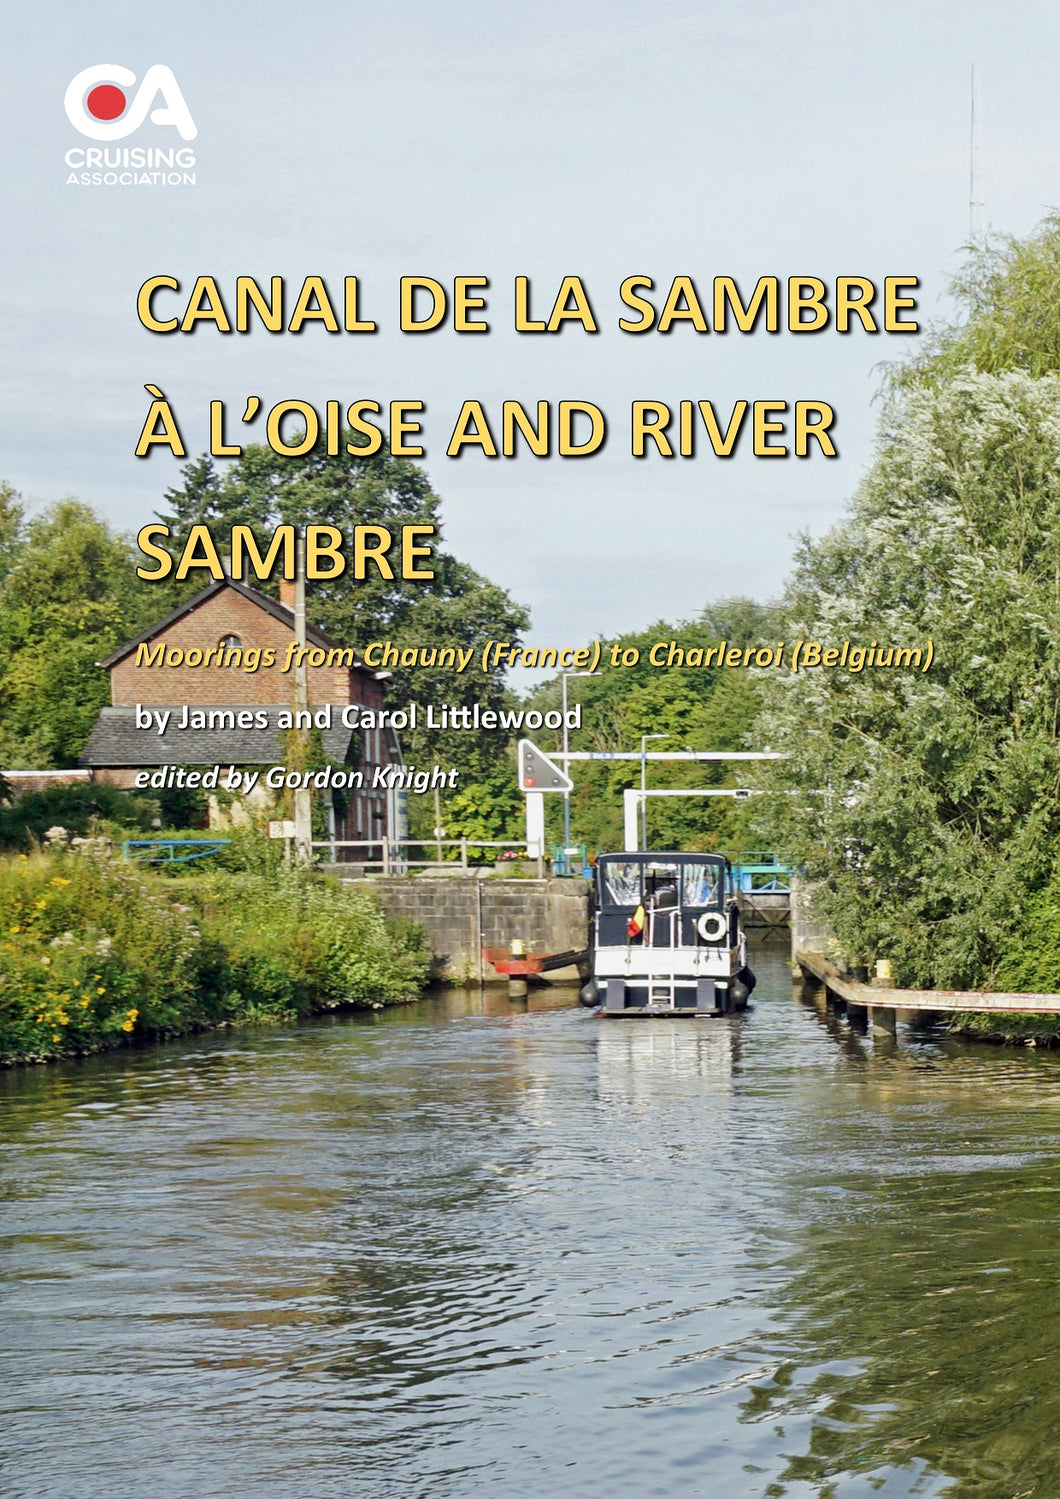 Guide to Canal de la Sambre à l'Oise and River Sambre